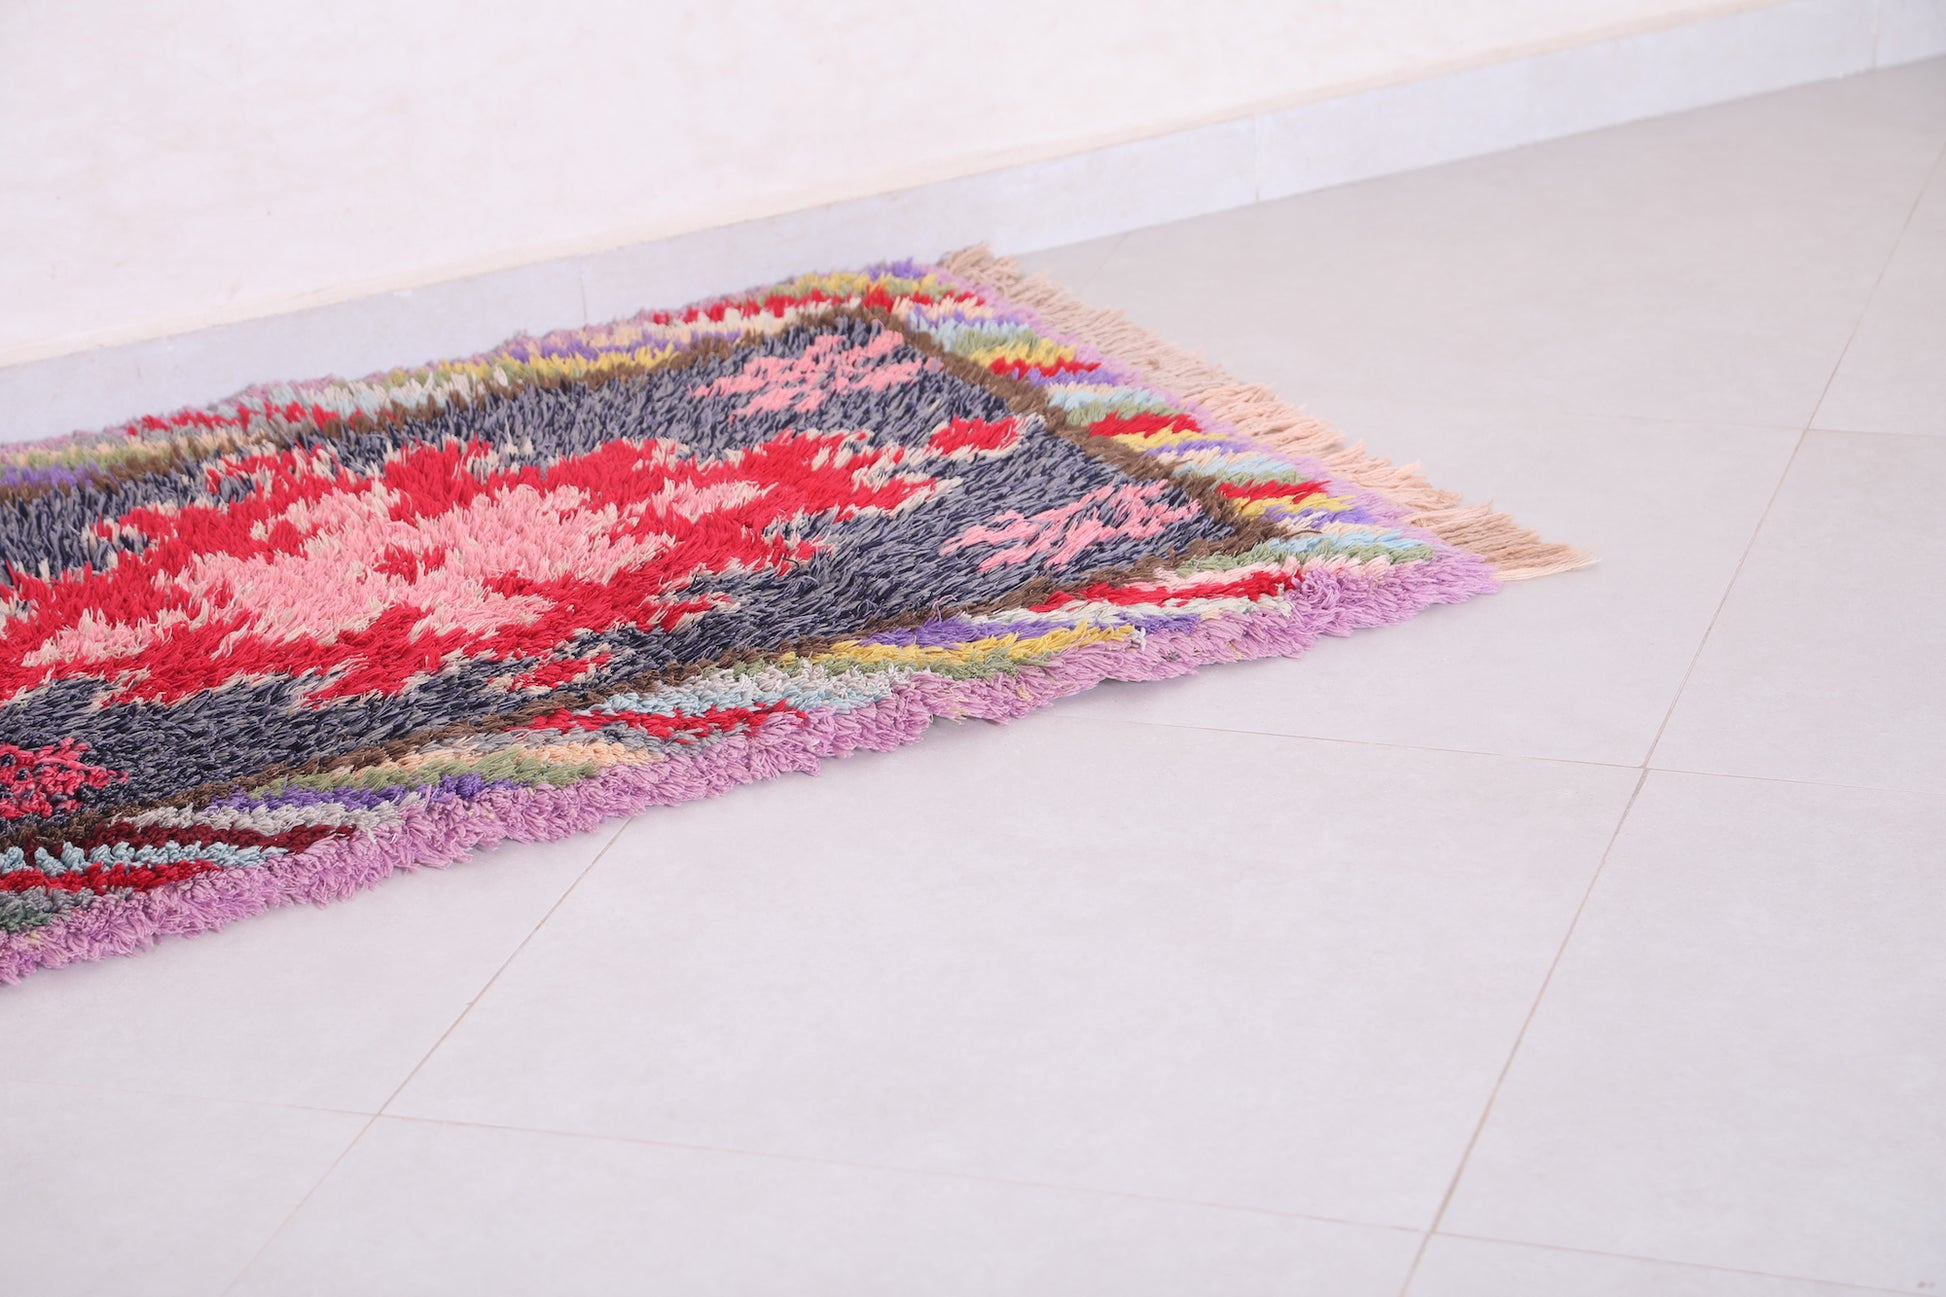 Vintage handmade moroccan colorful runner rug 2.5 FT X 6.3 FT